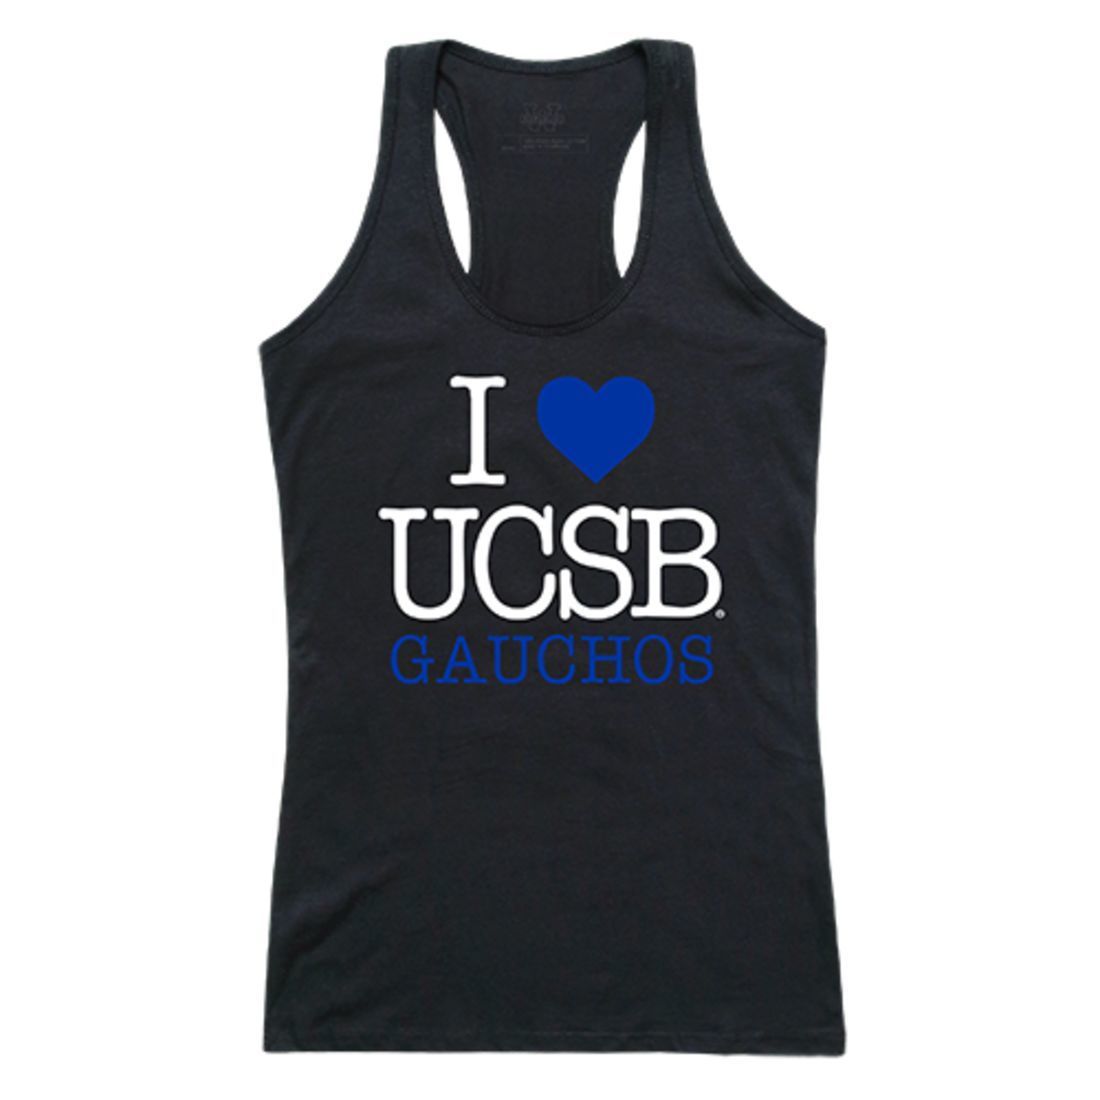 UCSB University of California Santa Barbara Gauchos Womens Love Tank Top Tee T-Shirt Black-Campus-Wardrobe